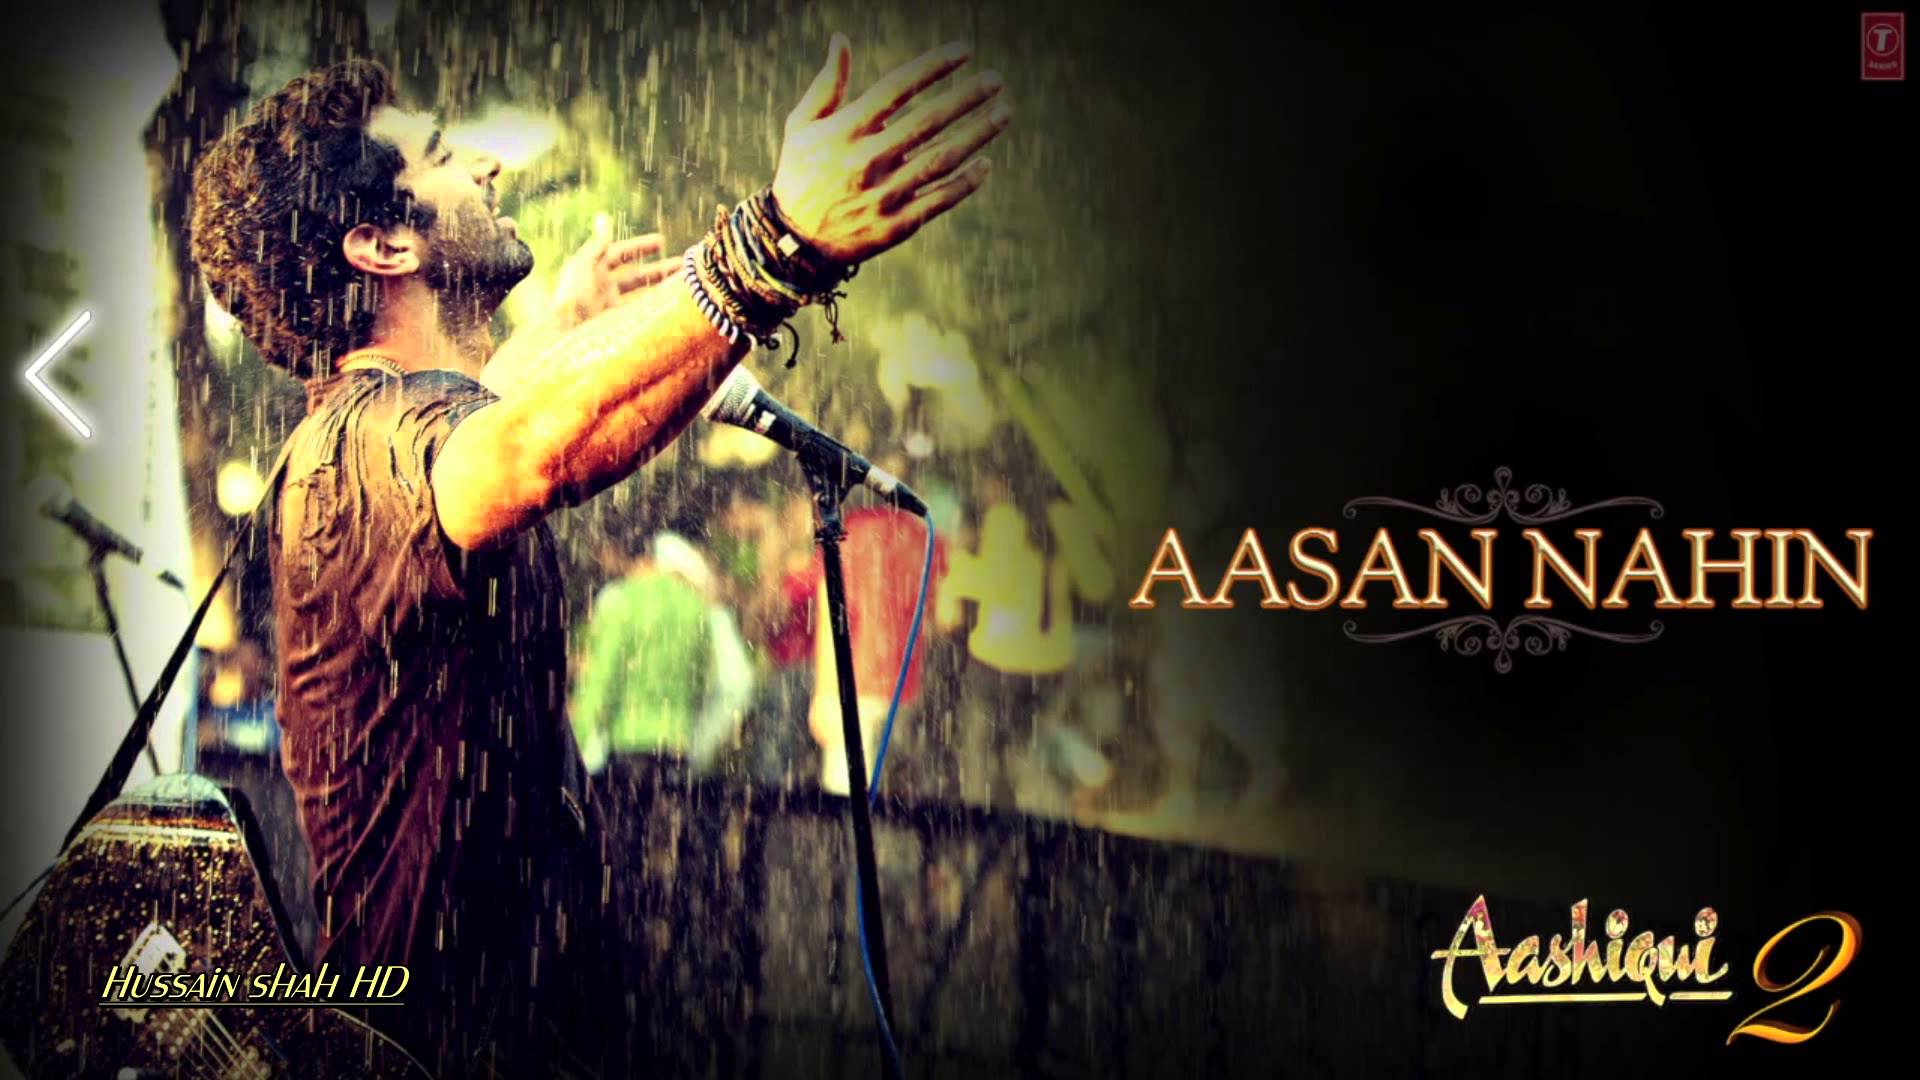 Aasan Nahin Full Song HD From:Aashiqui 2:BY Hussain shah